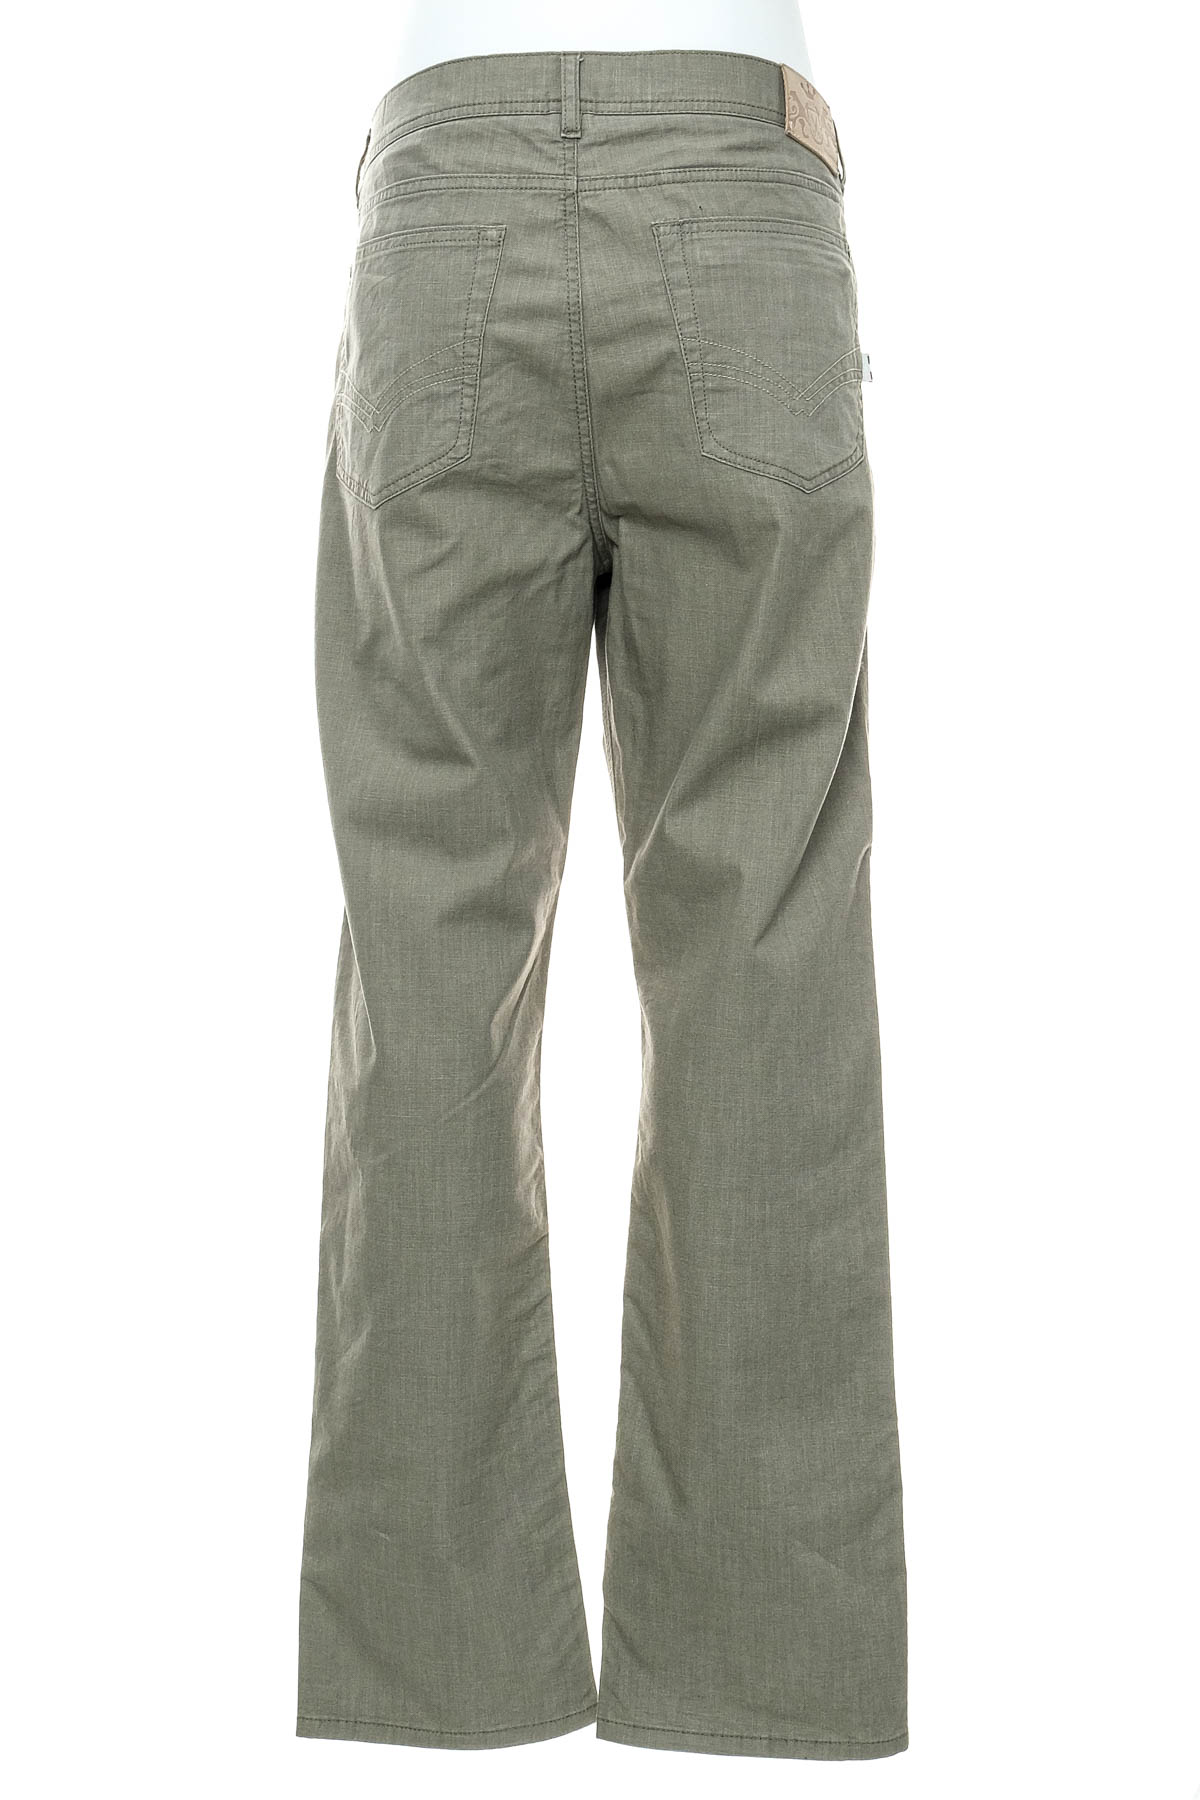 Men's trousers - Walbusch - 1